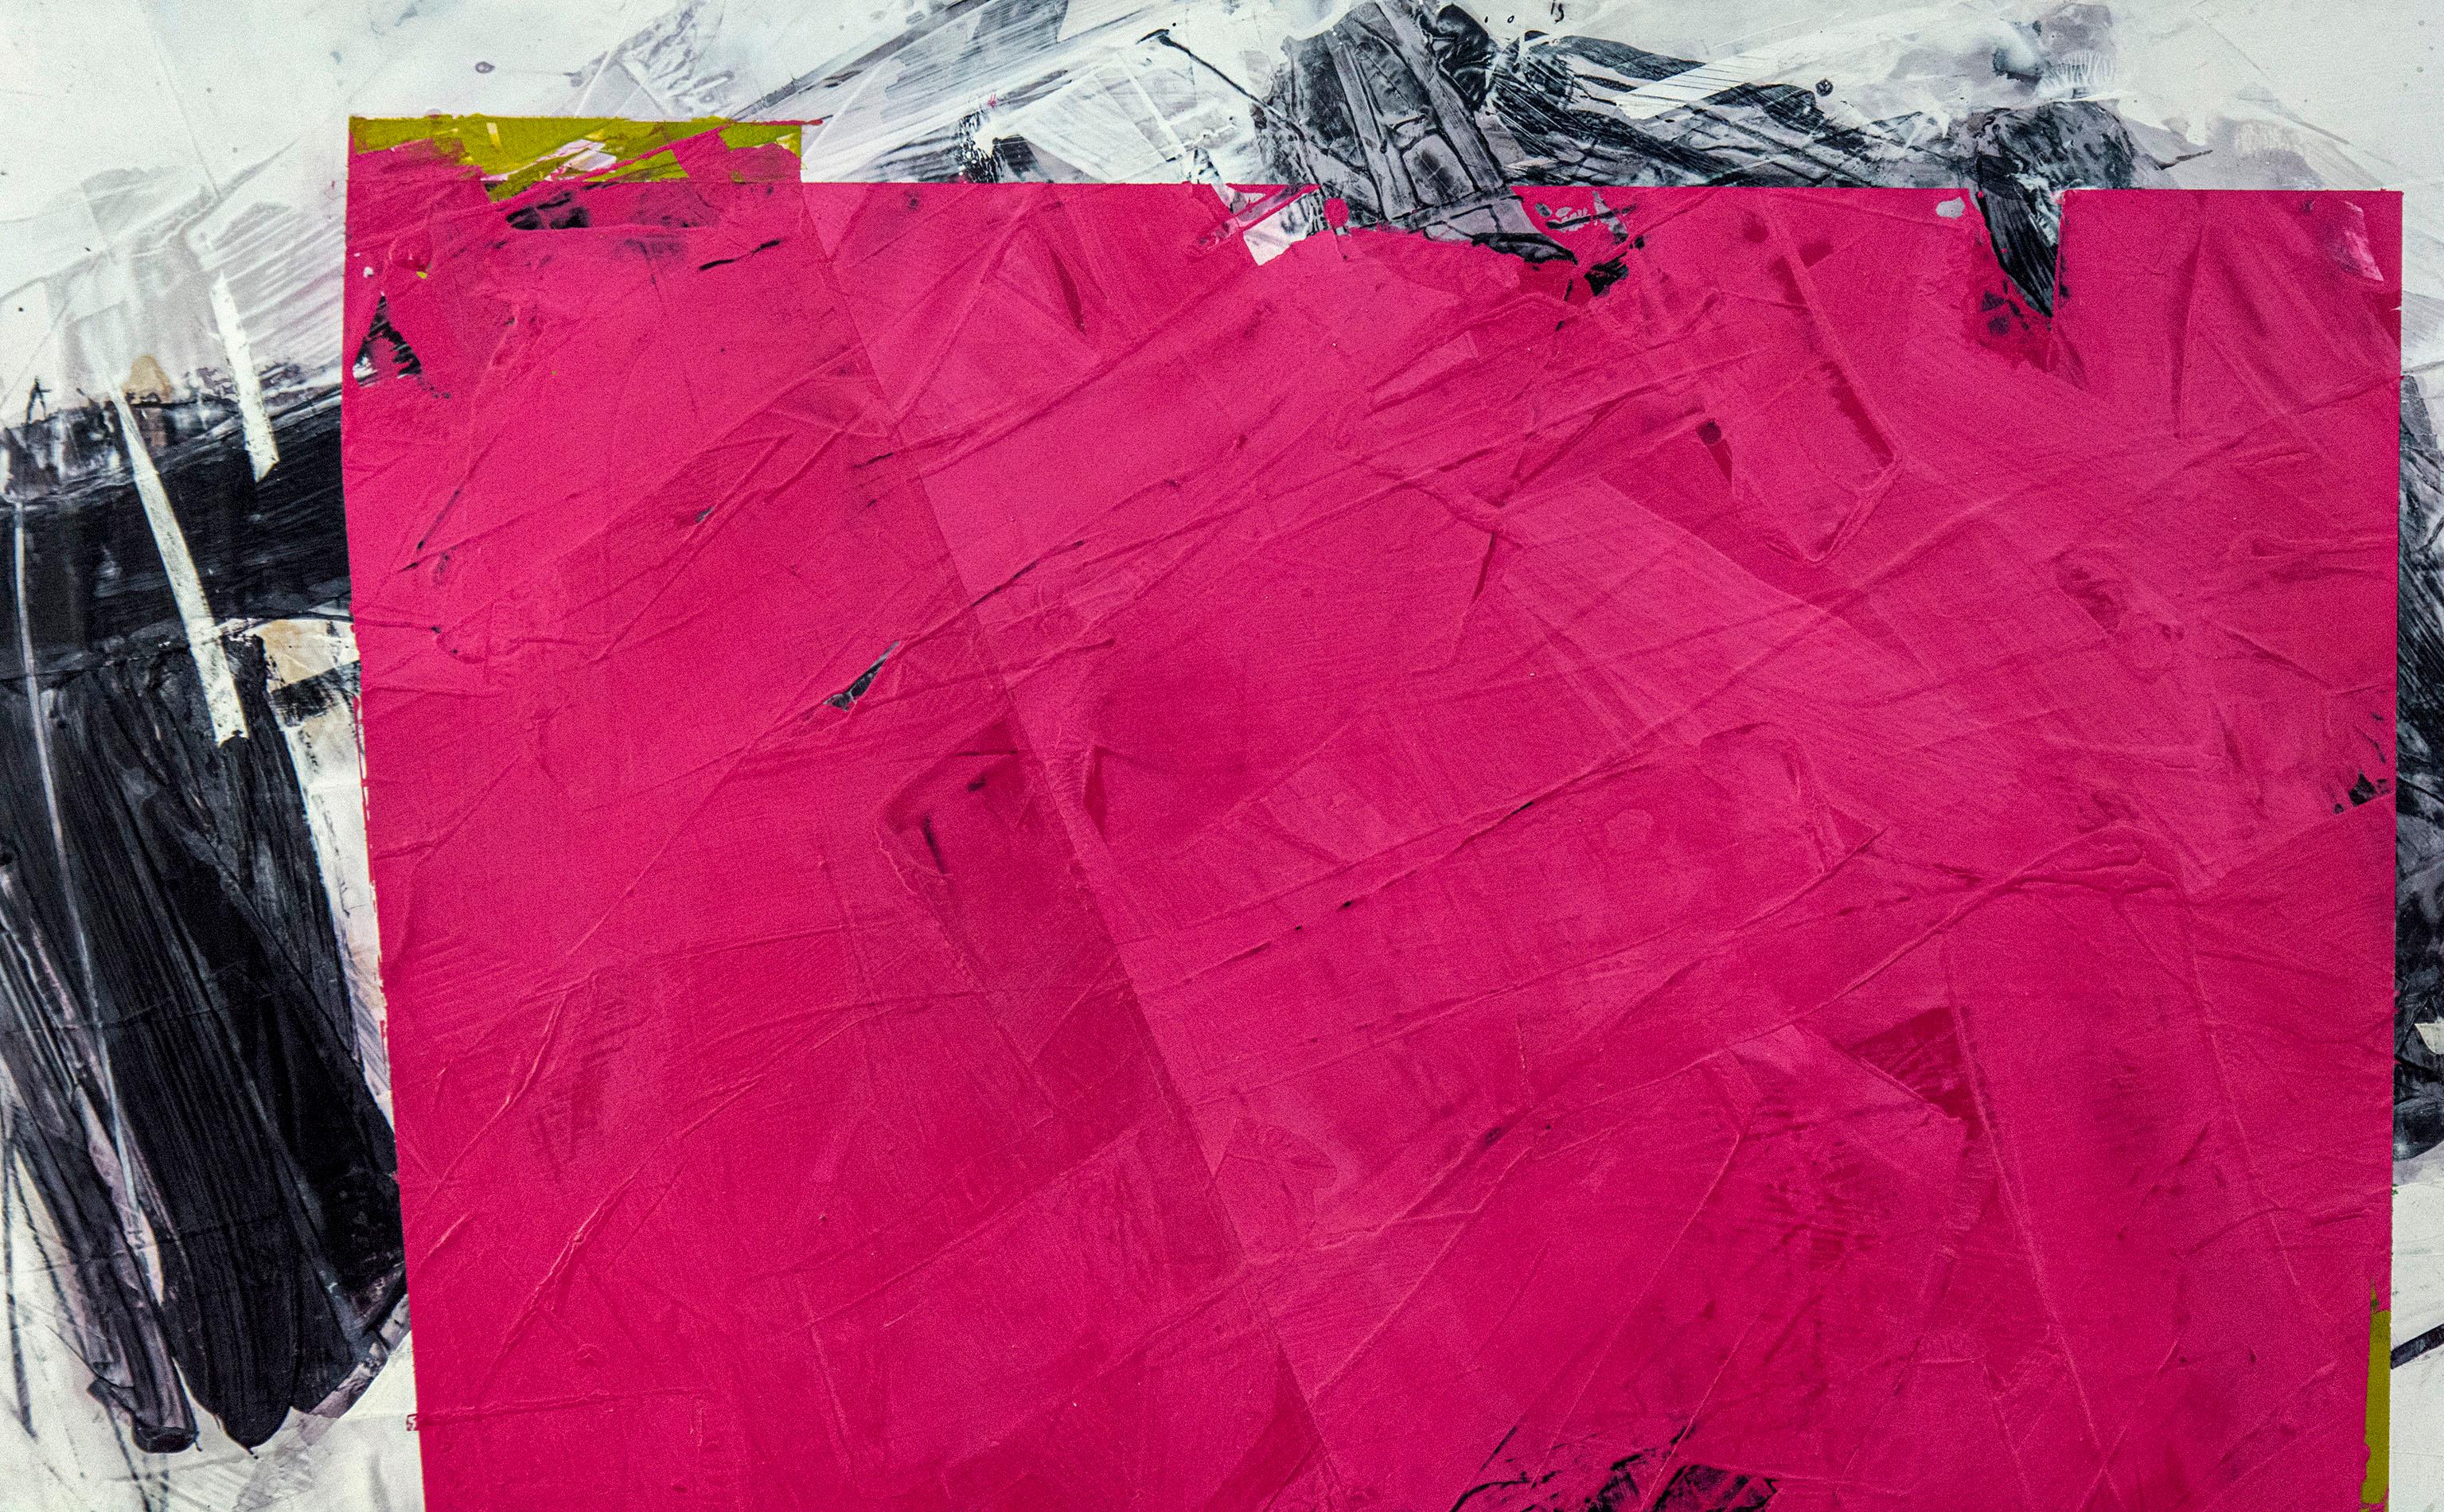 Crimson No 2 - große, kühne, abstrakte Formen, Marmorstaub, Acryl, Wachs auf Leinwand (Rot), Abstract Painting, von Ivo Stoyanov